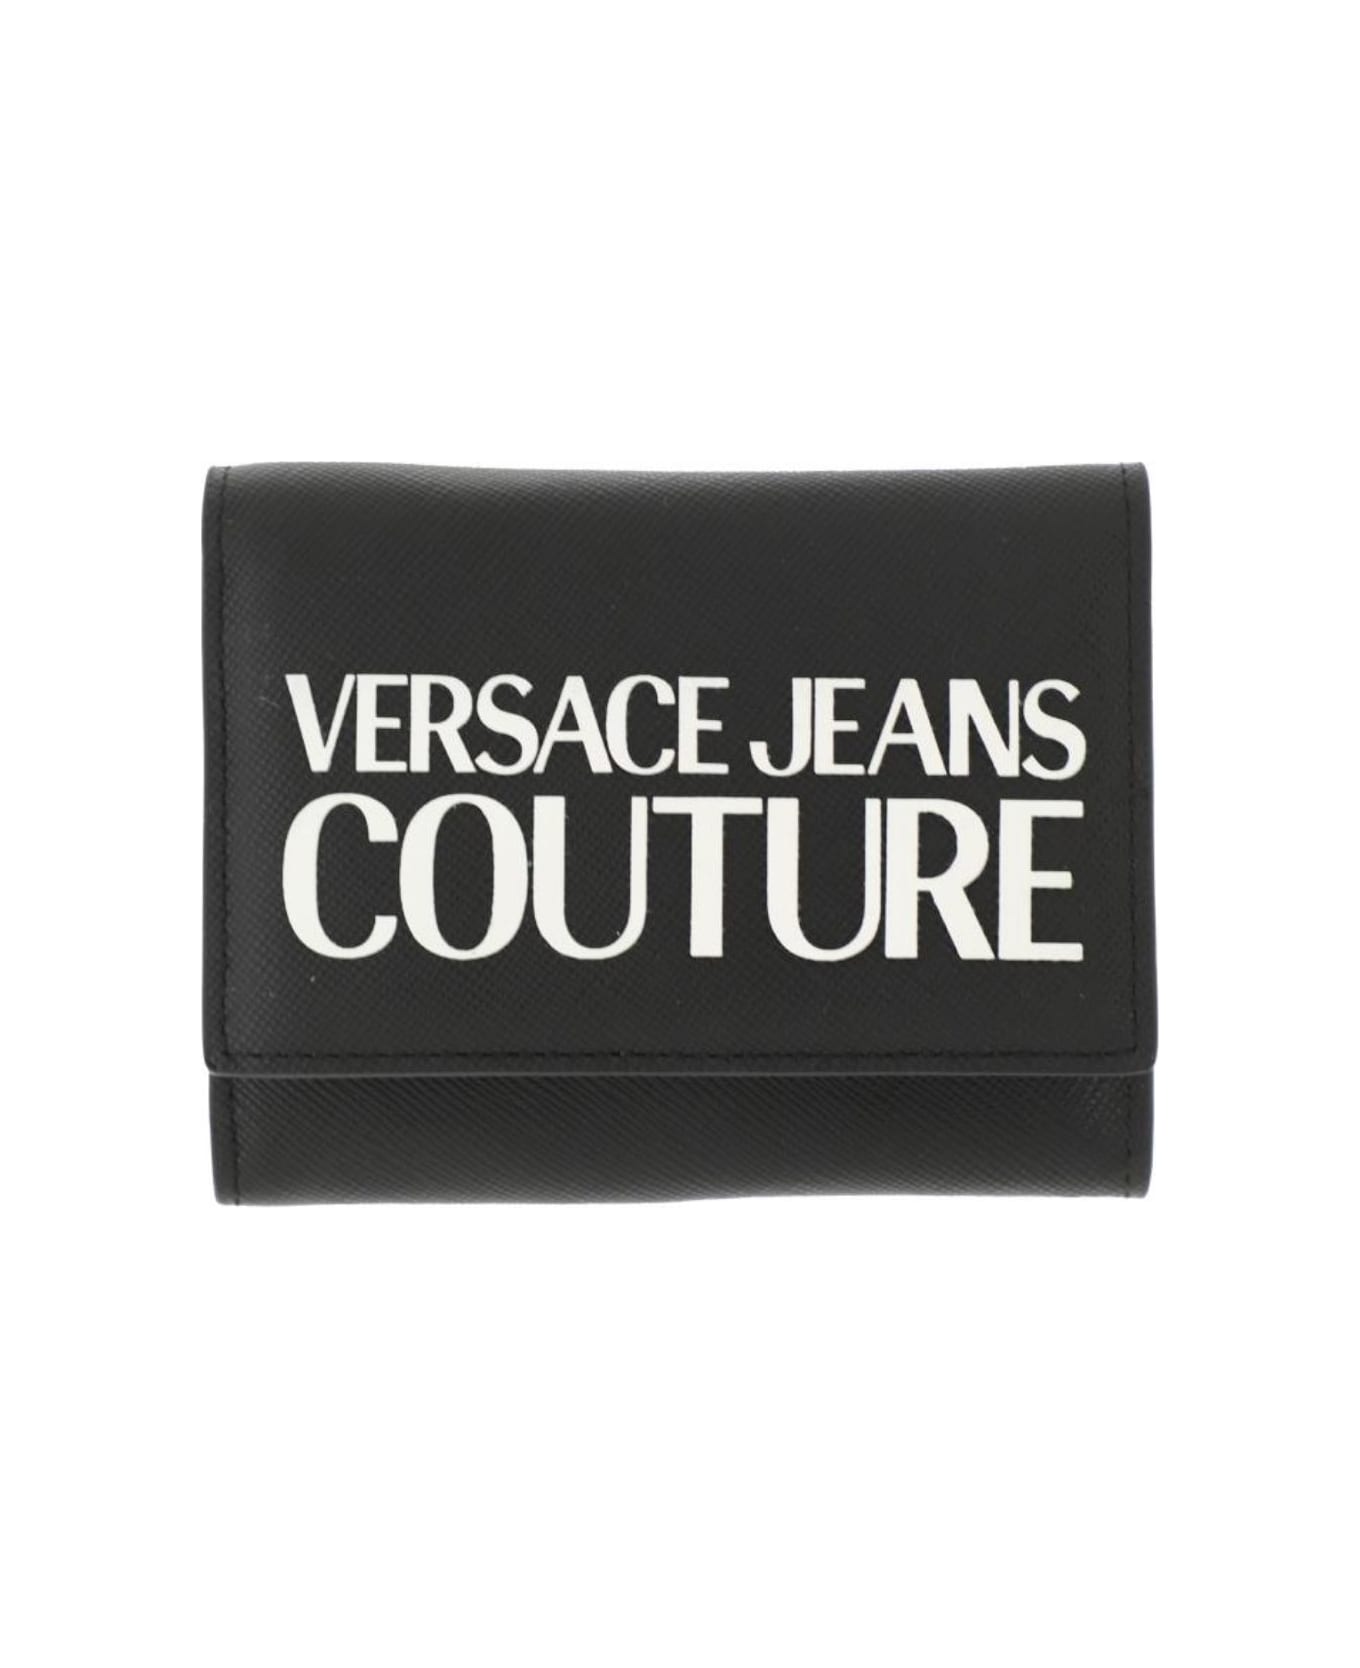 Versace Jeans Couture Wallet - BLACK